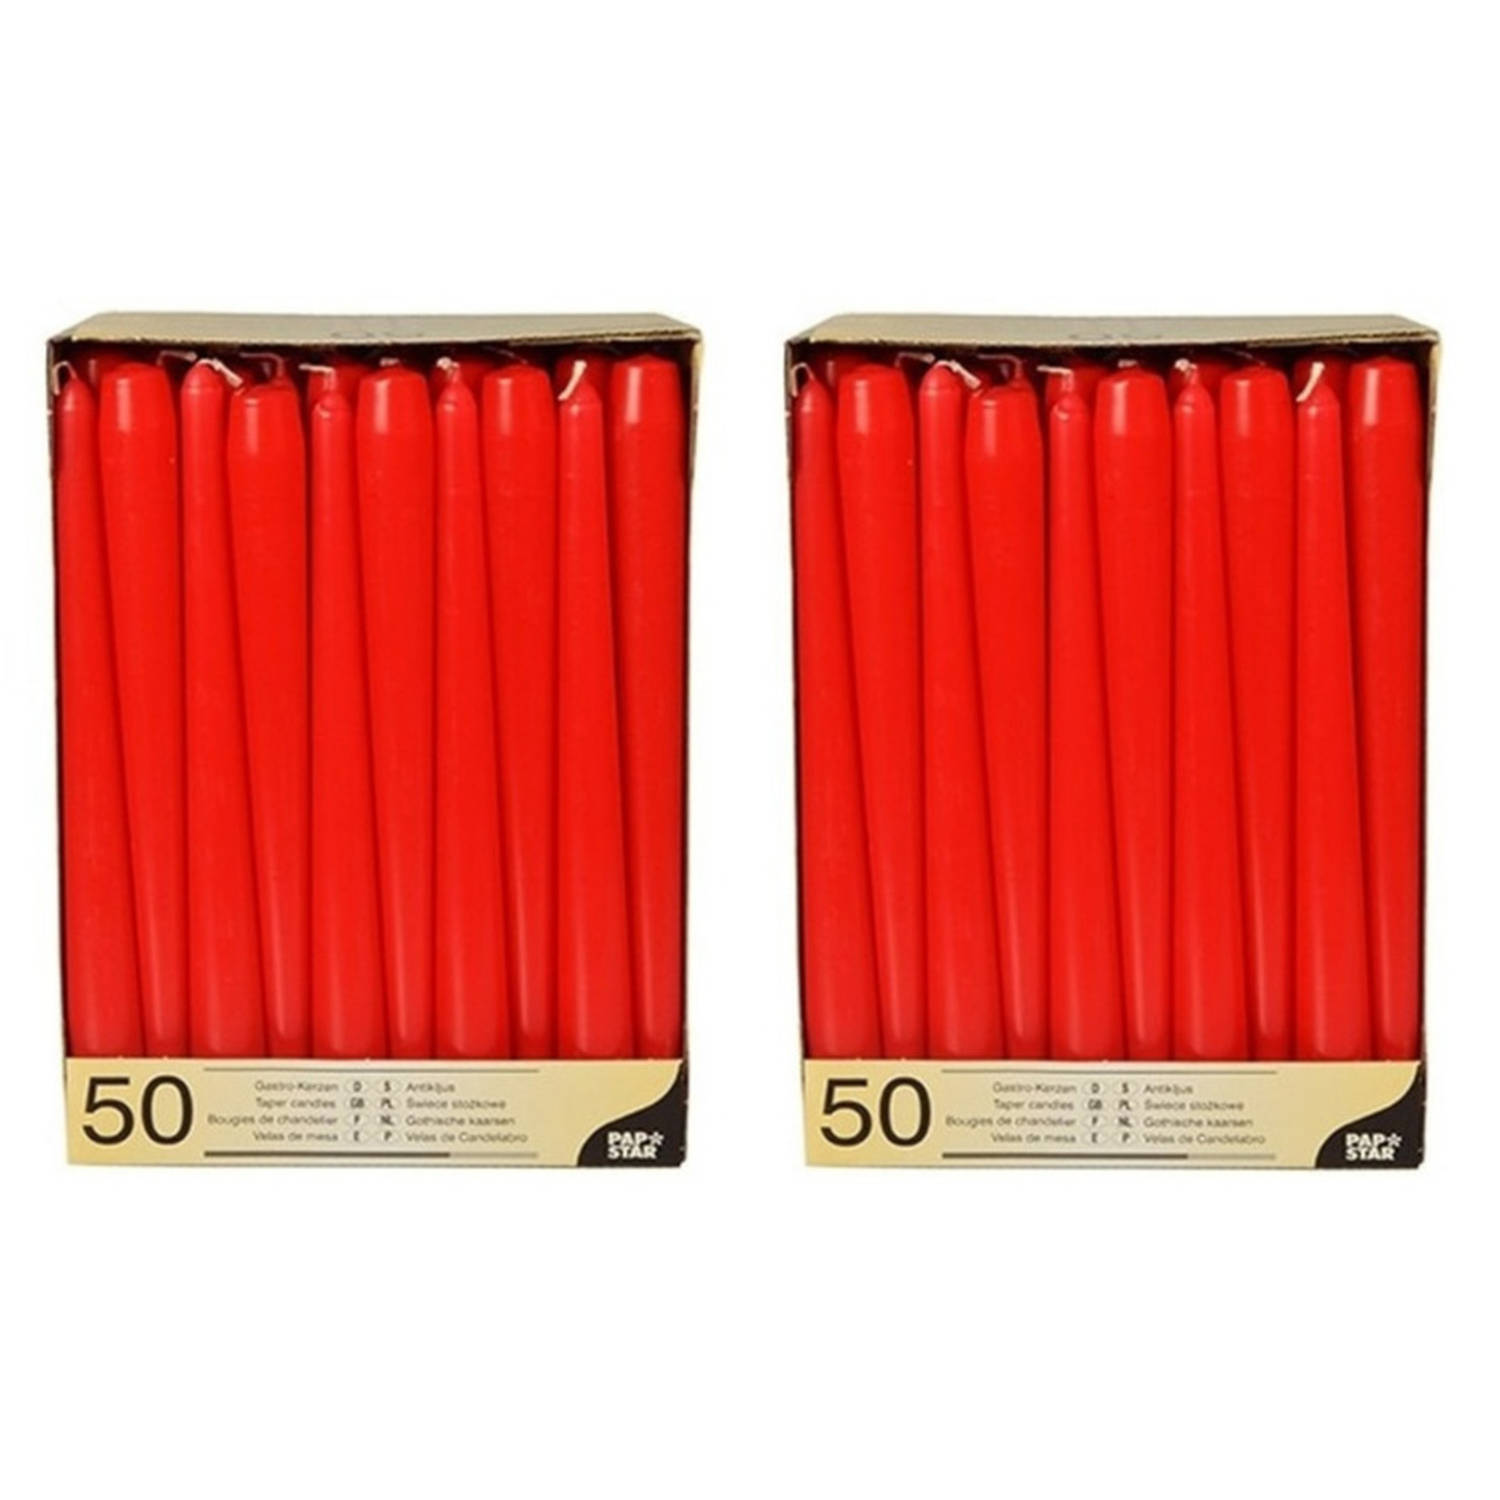 Papstar 50x stuks dinerkaarsen 25 cm - Dinerkaarsen - Rood